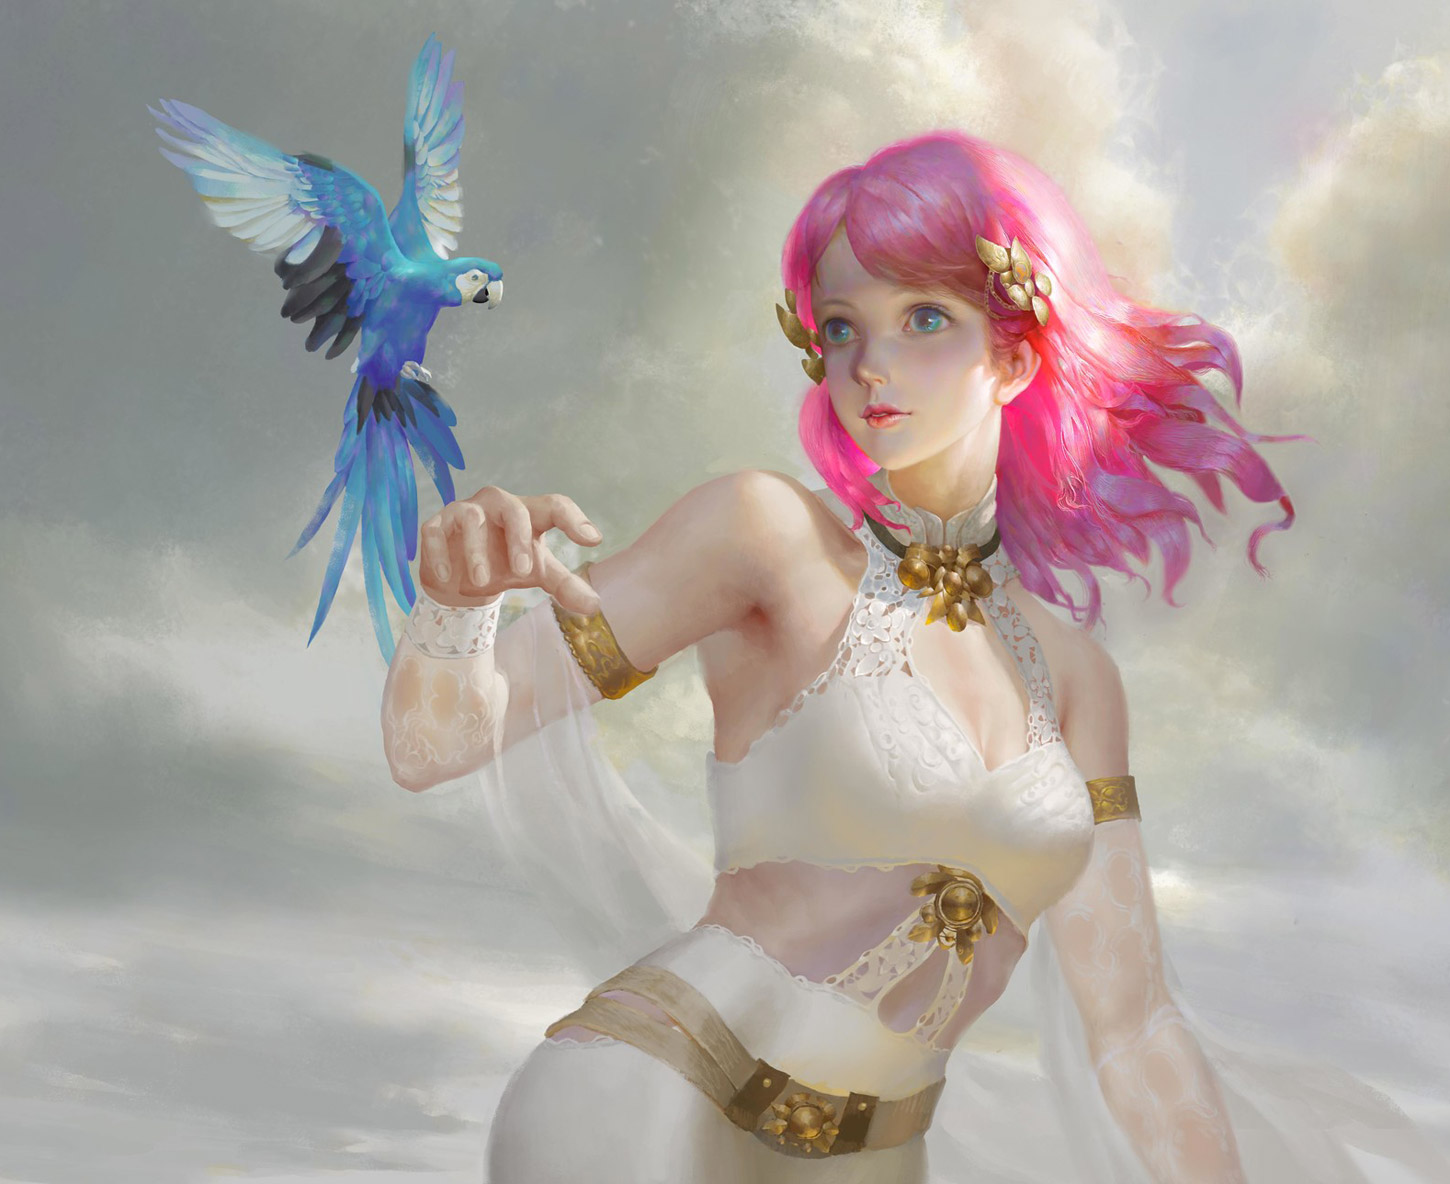 3d model digital artwork fantasy girl with parrot by yalun